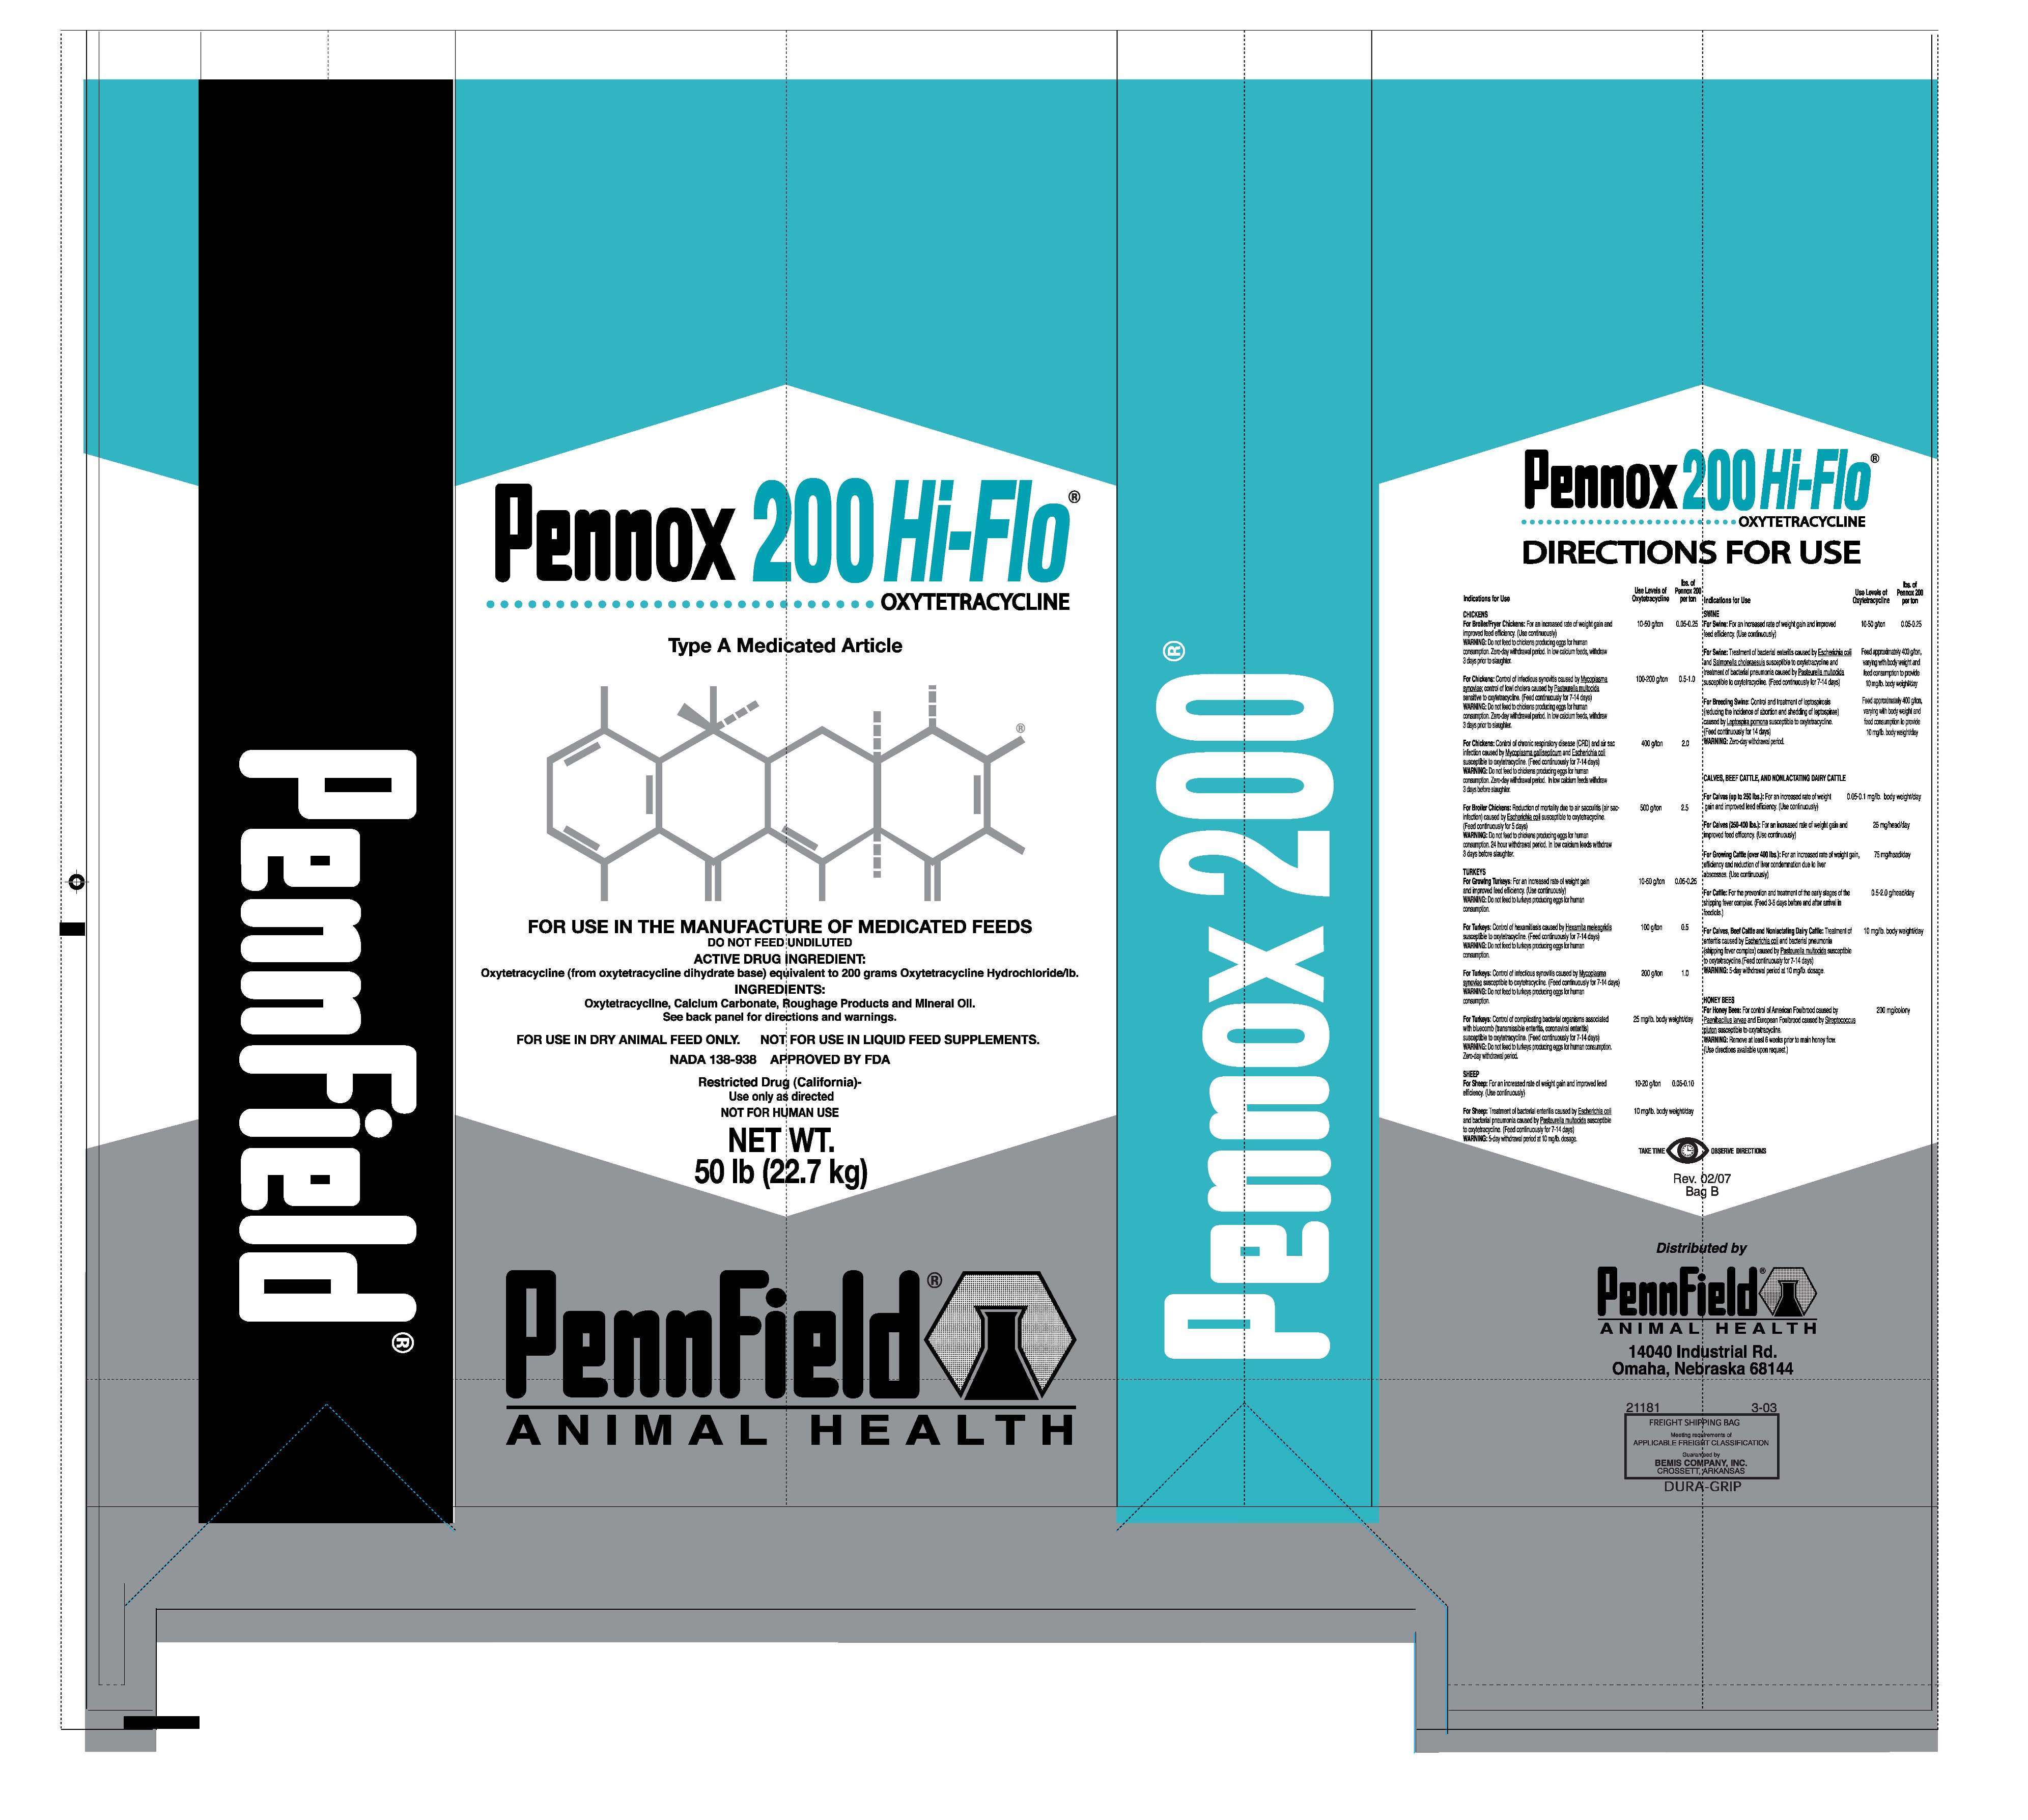 Pennox 200 Hi-Flo